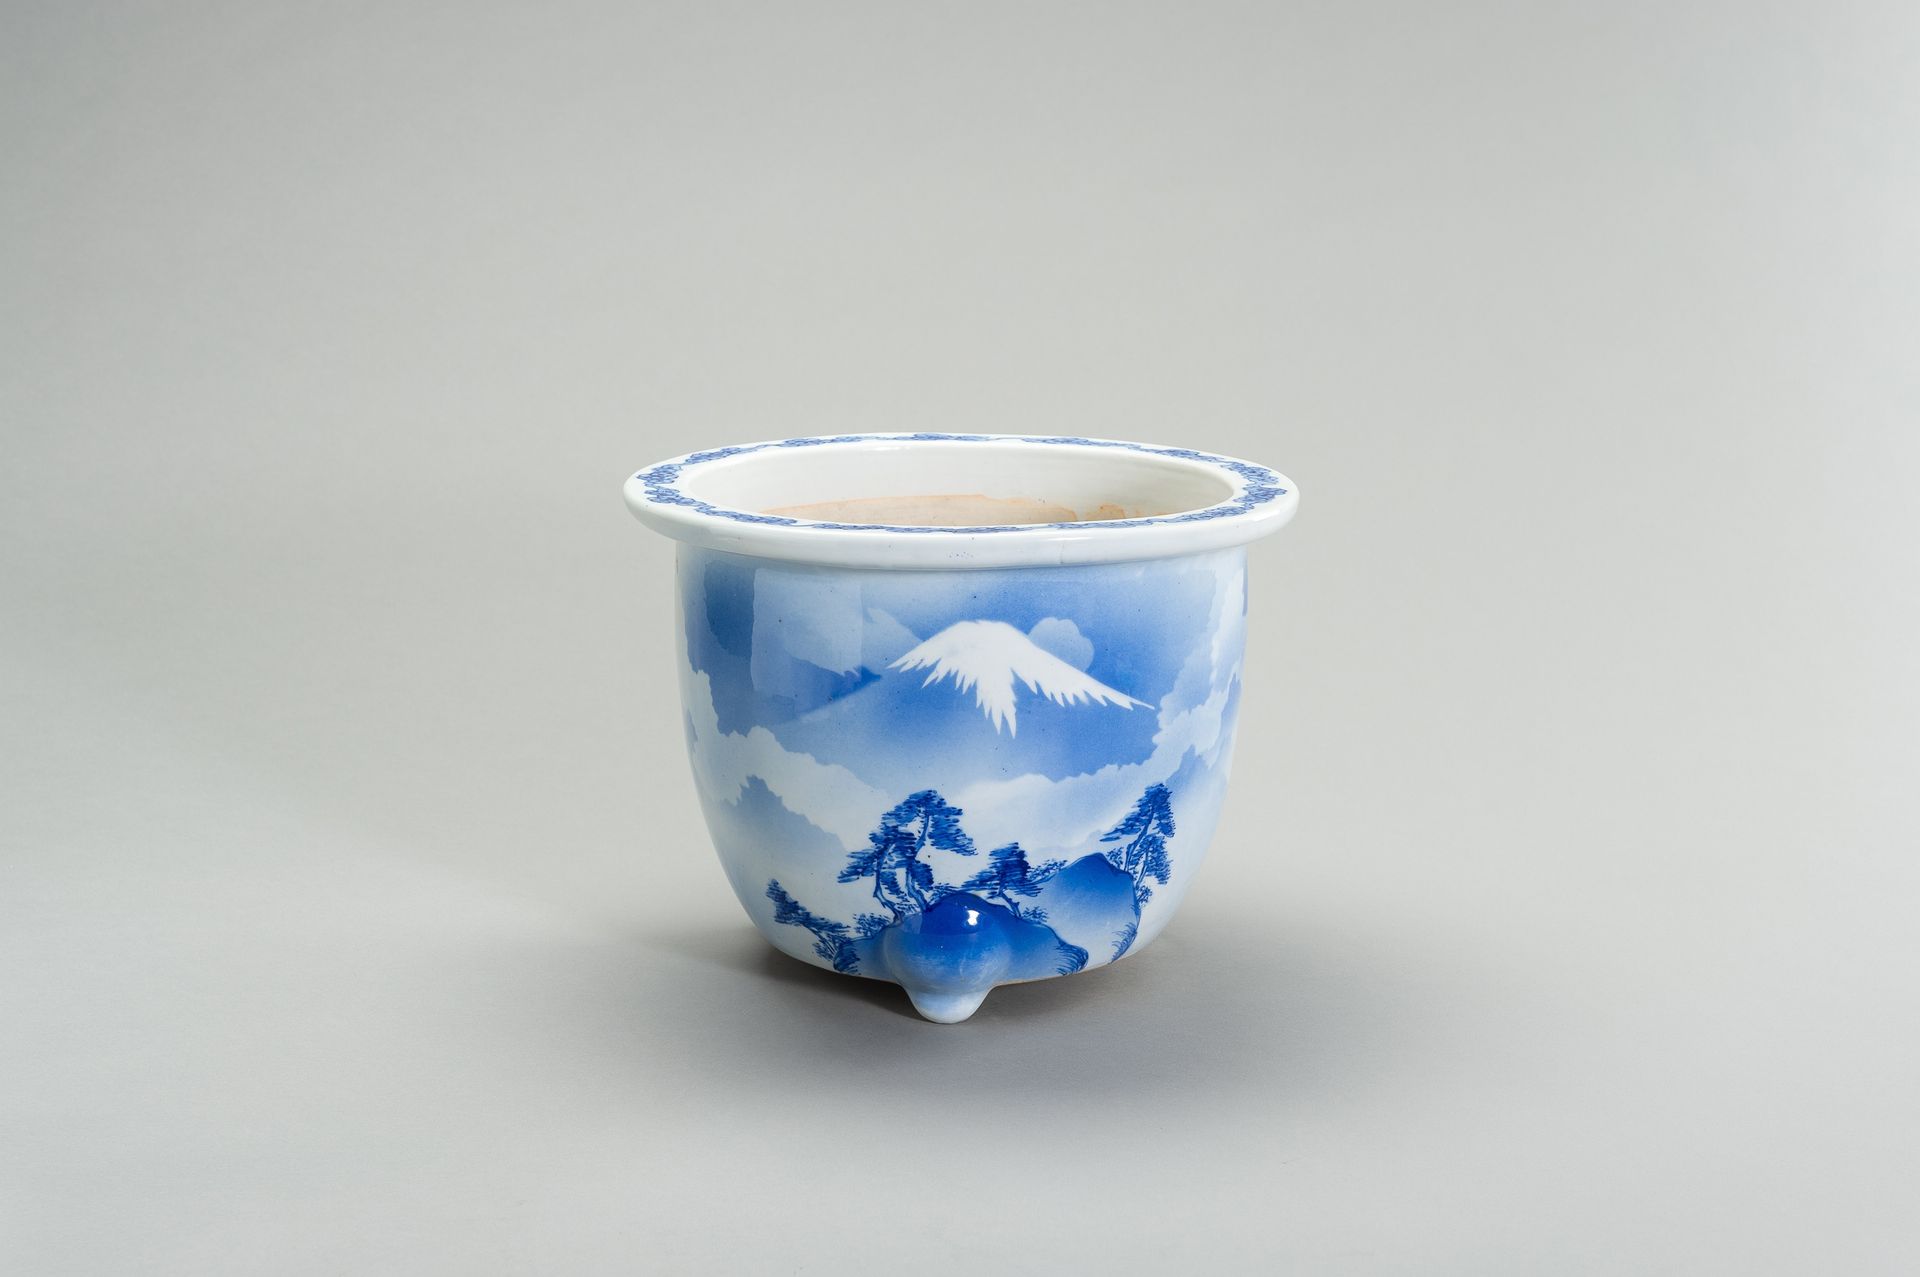 A BLUE AND WHITE PORCELAIN JARDINIERE WITH MOUNT FUJI 蓝白瓷富士山花园
日本，明治时期（1868-1912&hellip;